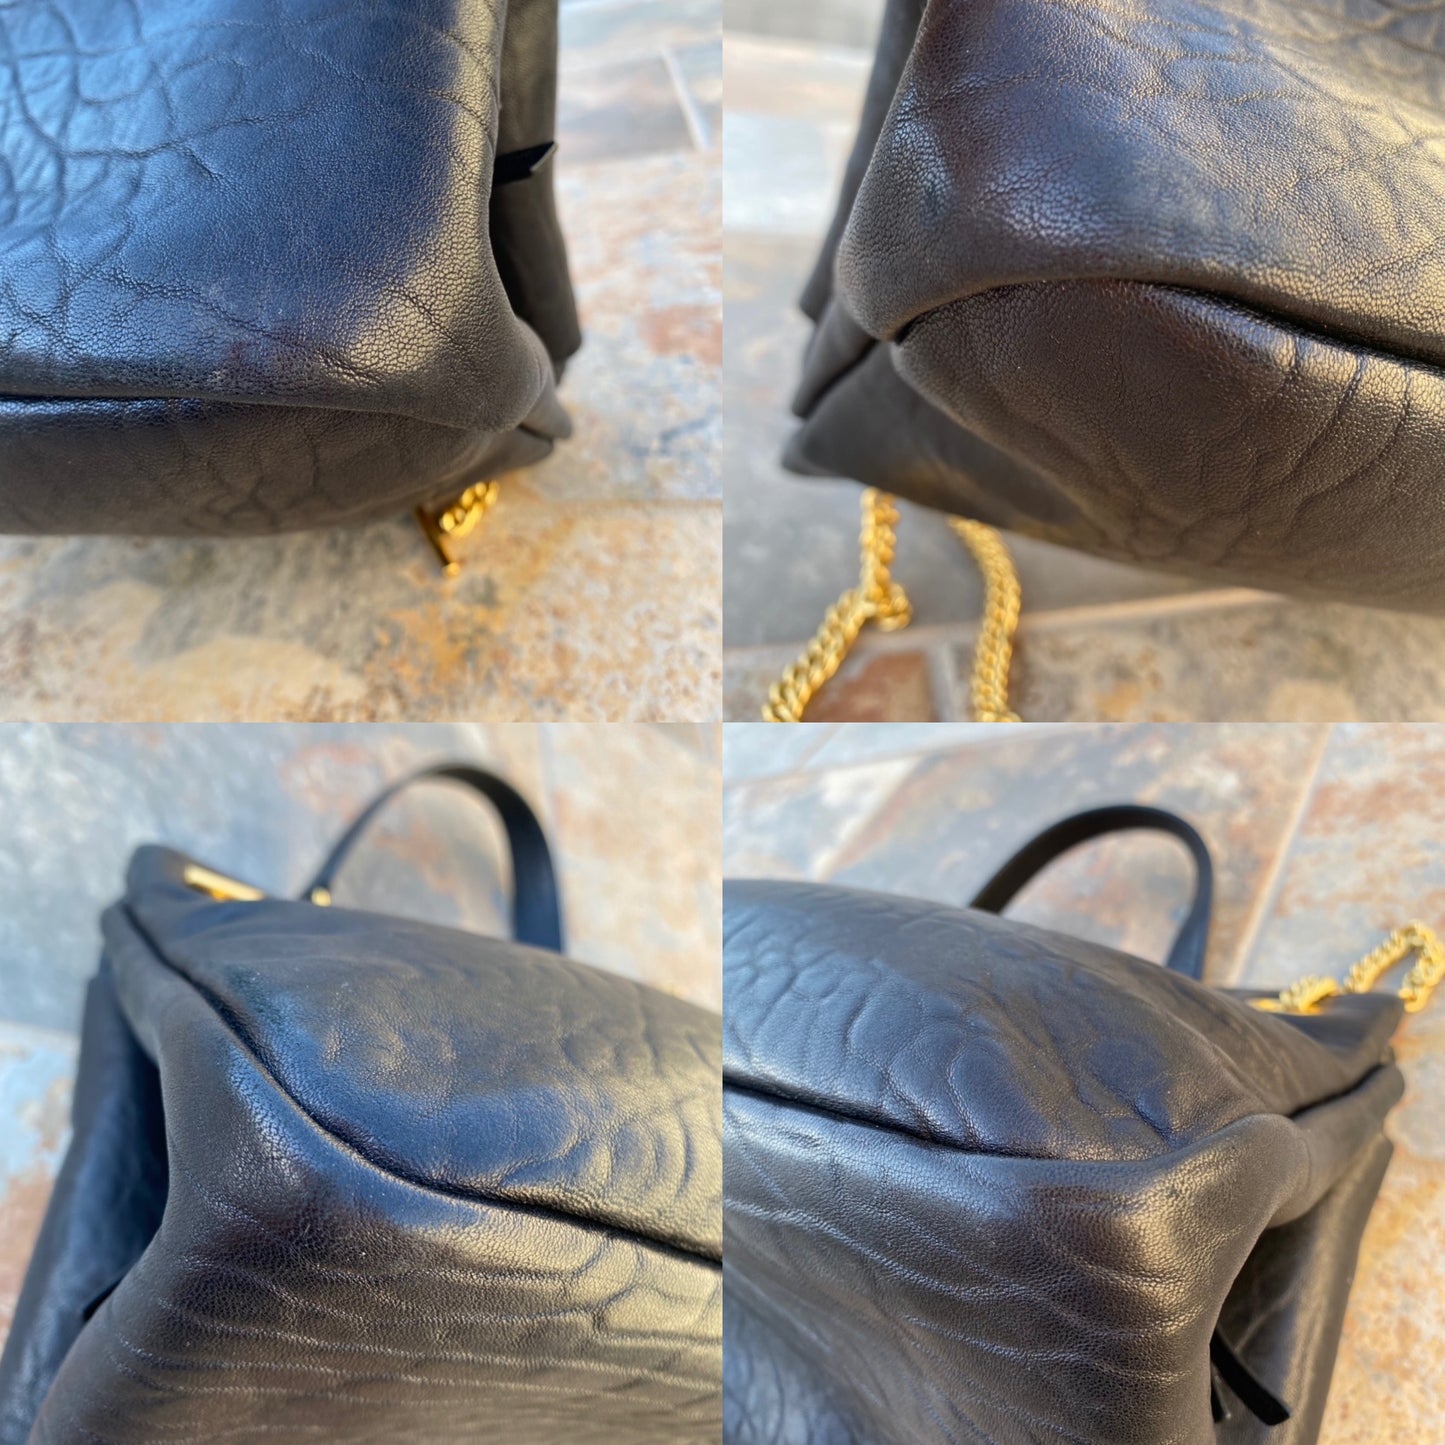 Mulberry Winsley Pebbled Lambskin Leather Shoulder Bag